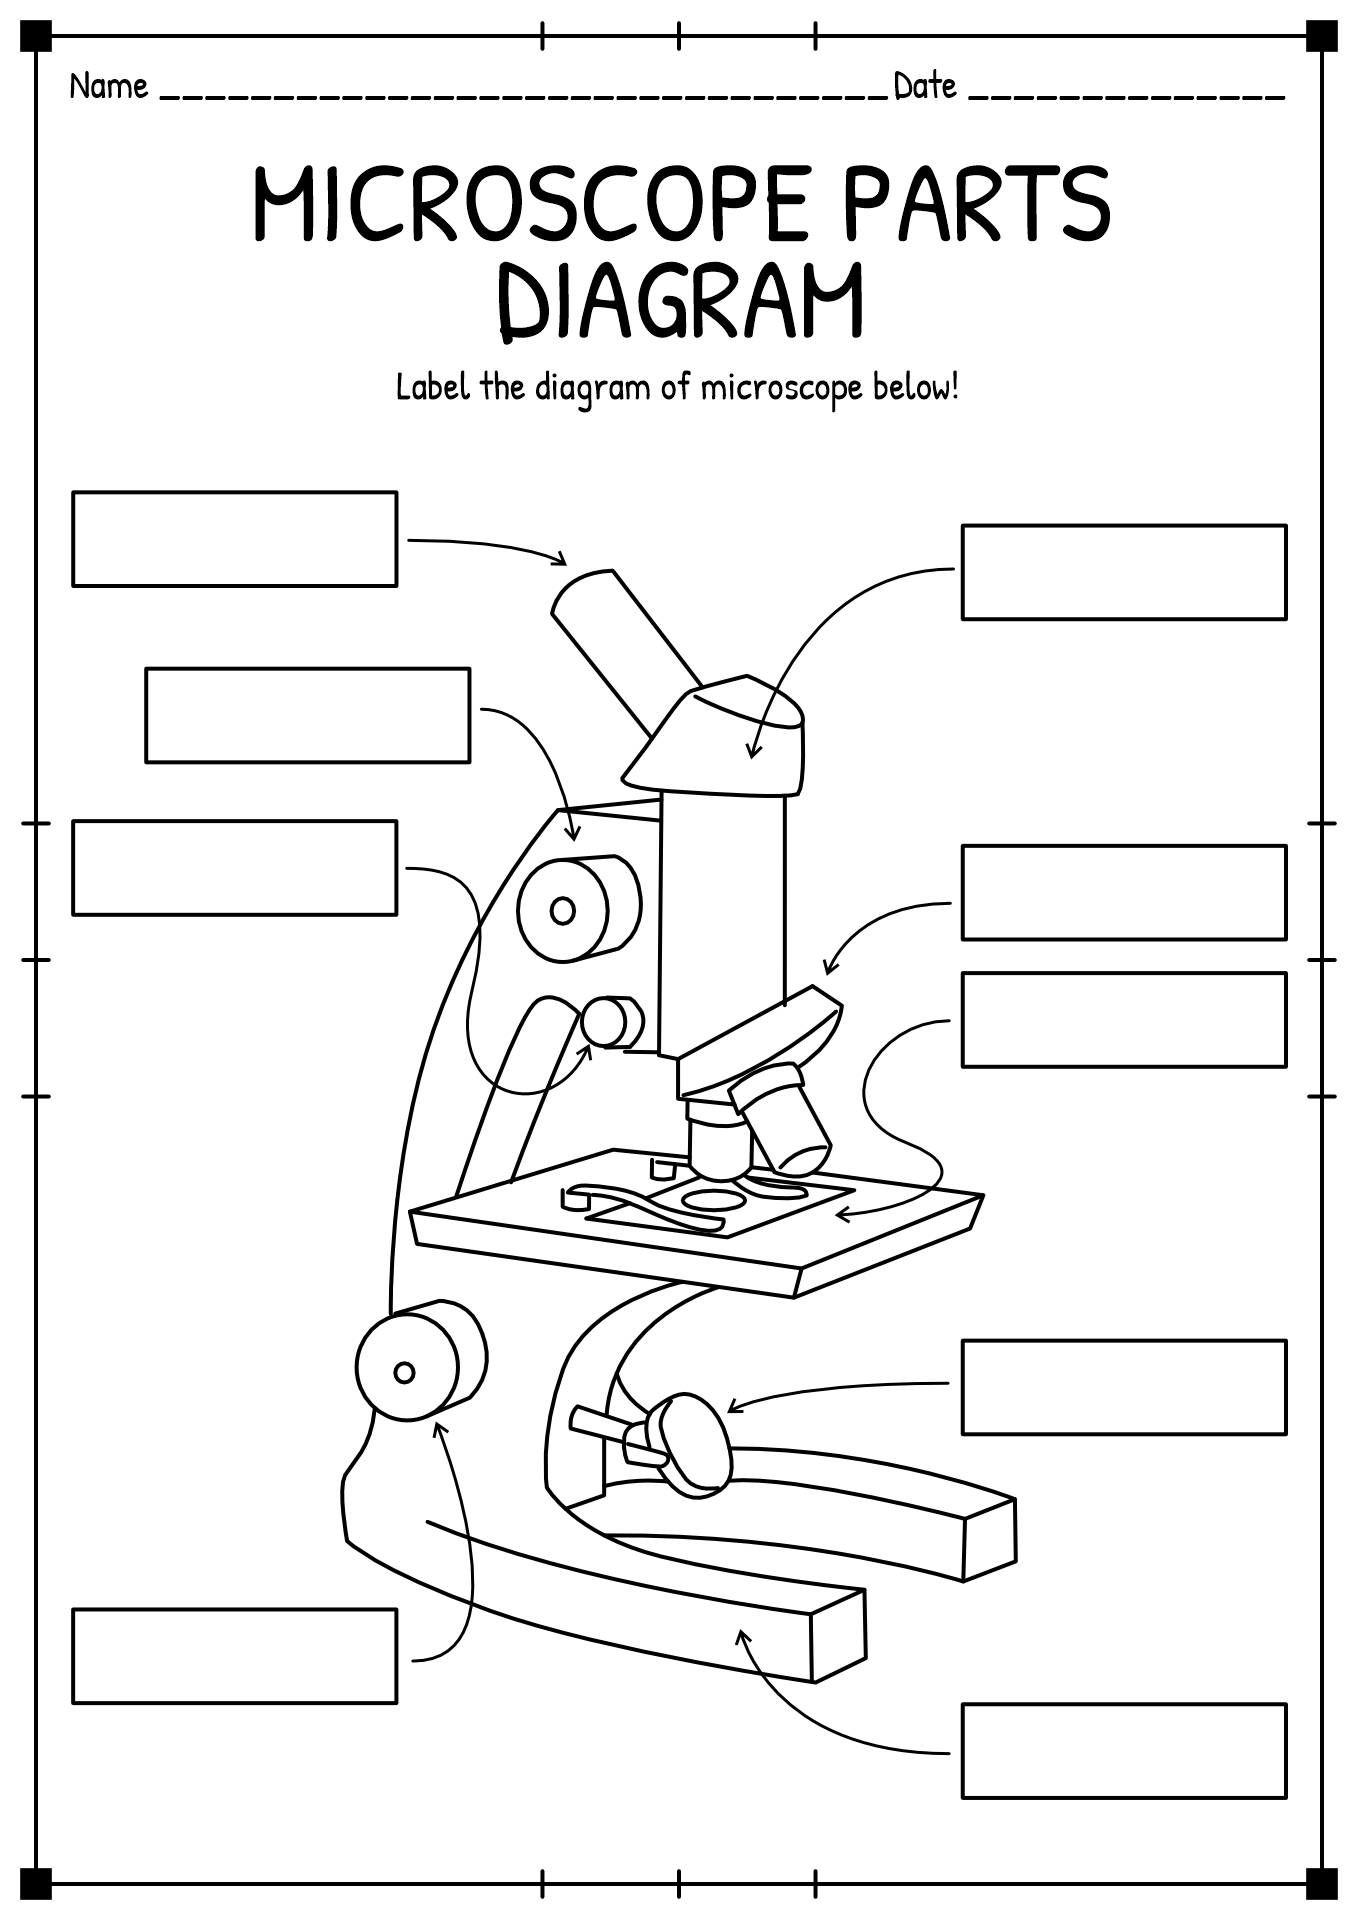 11 Best Images of Light Microscope Diagram Worksheet - Compound Light ...